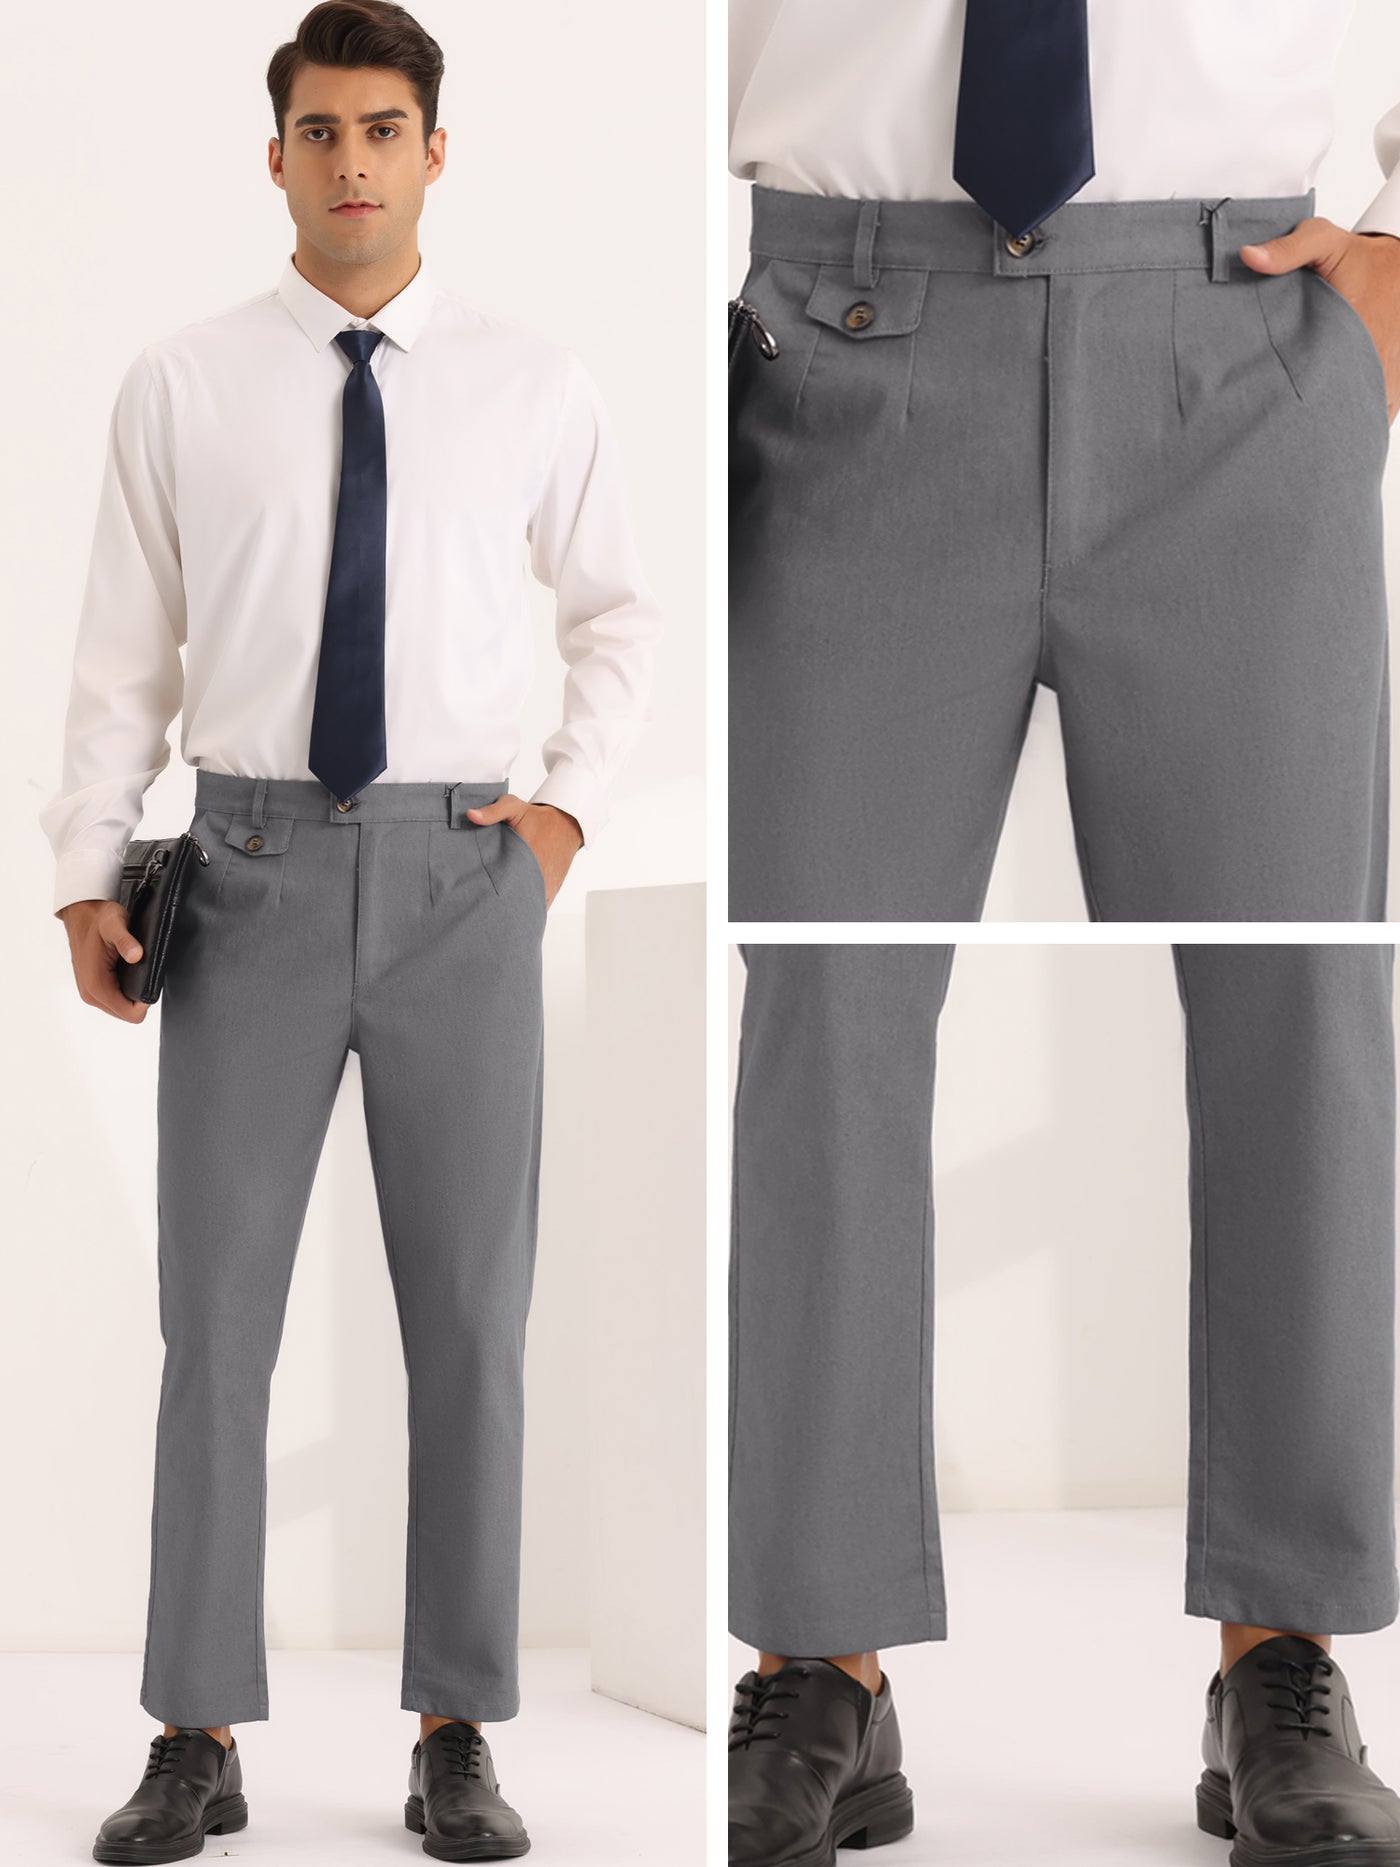 Bublédon Double Pleated Dress Pants for Men's Solid Color Slim Fit Formal Trousers